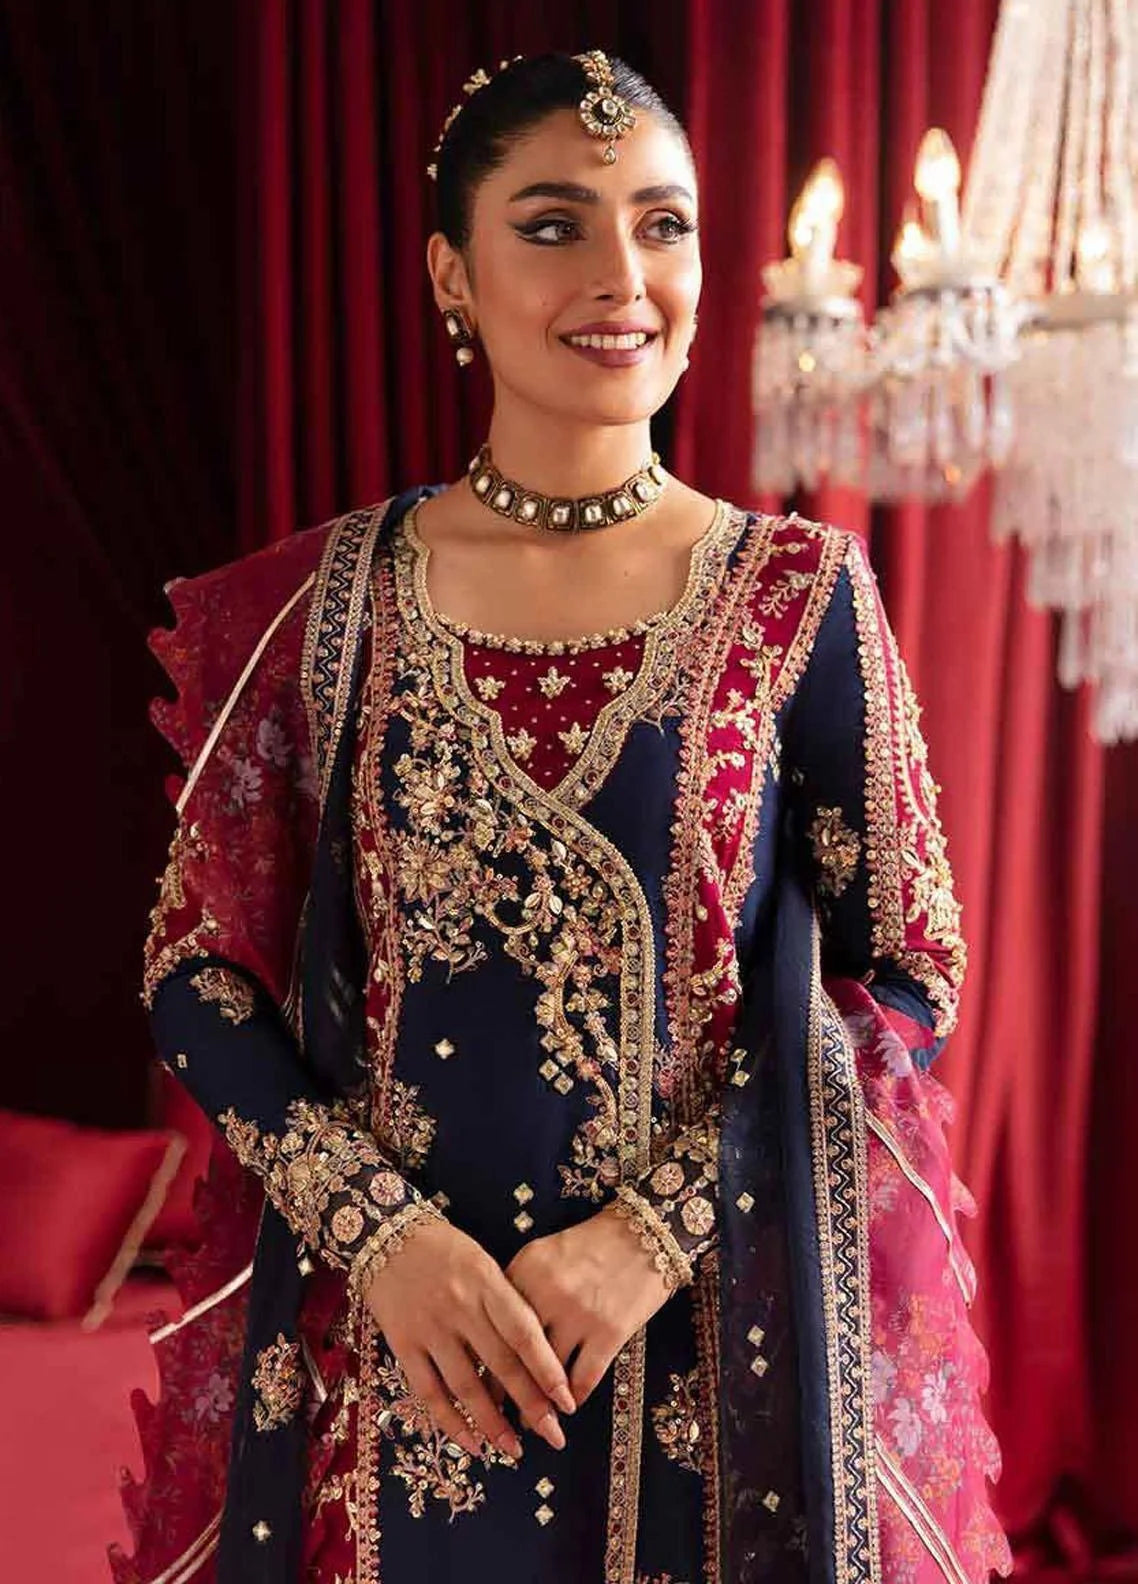 Qalamkar Formal Meharbano Inspired Embroidered 3 Piece Wedding Outfit - Desi Posh